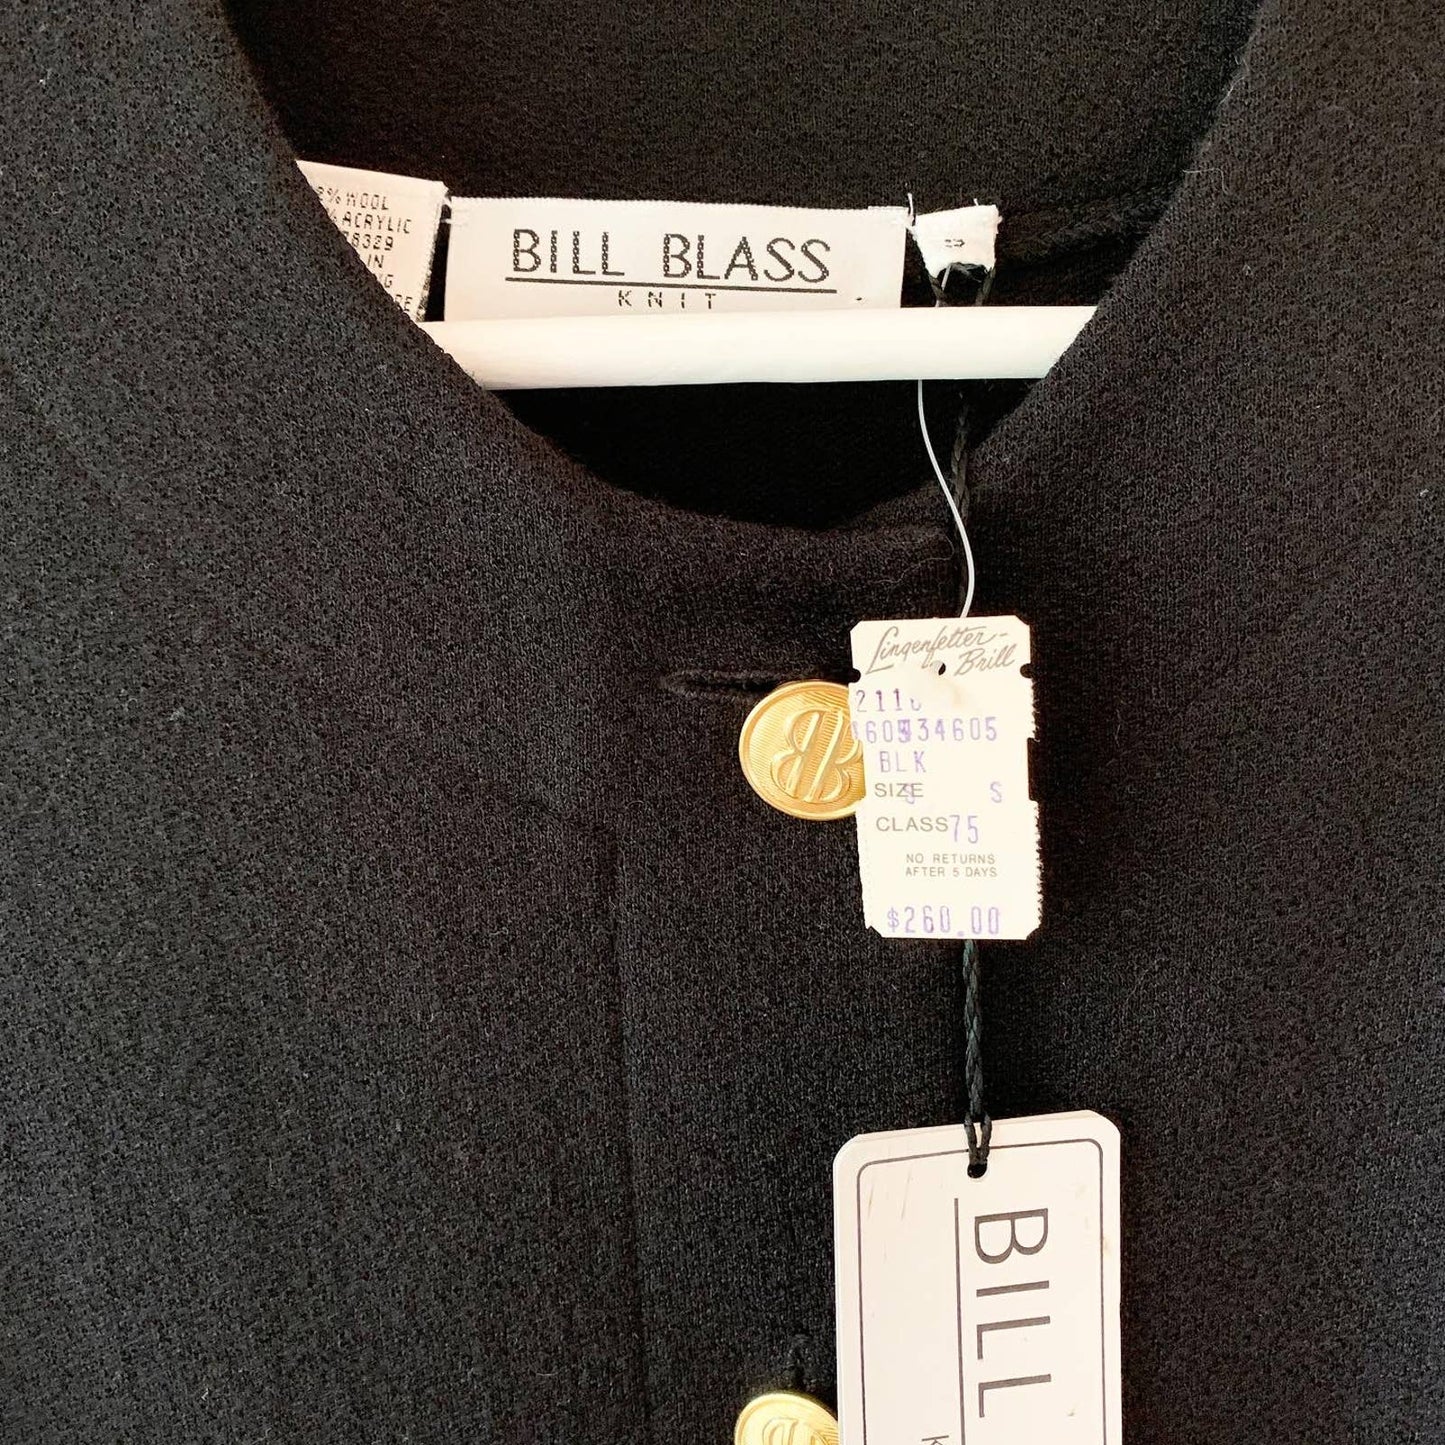 Bill Blass Knit Sweater Cardigan Gold Embroidery